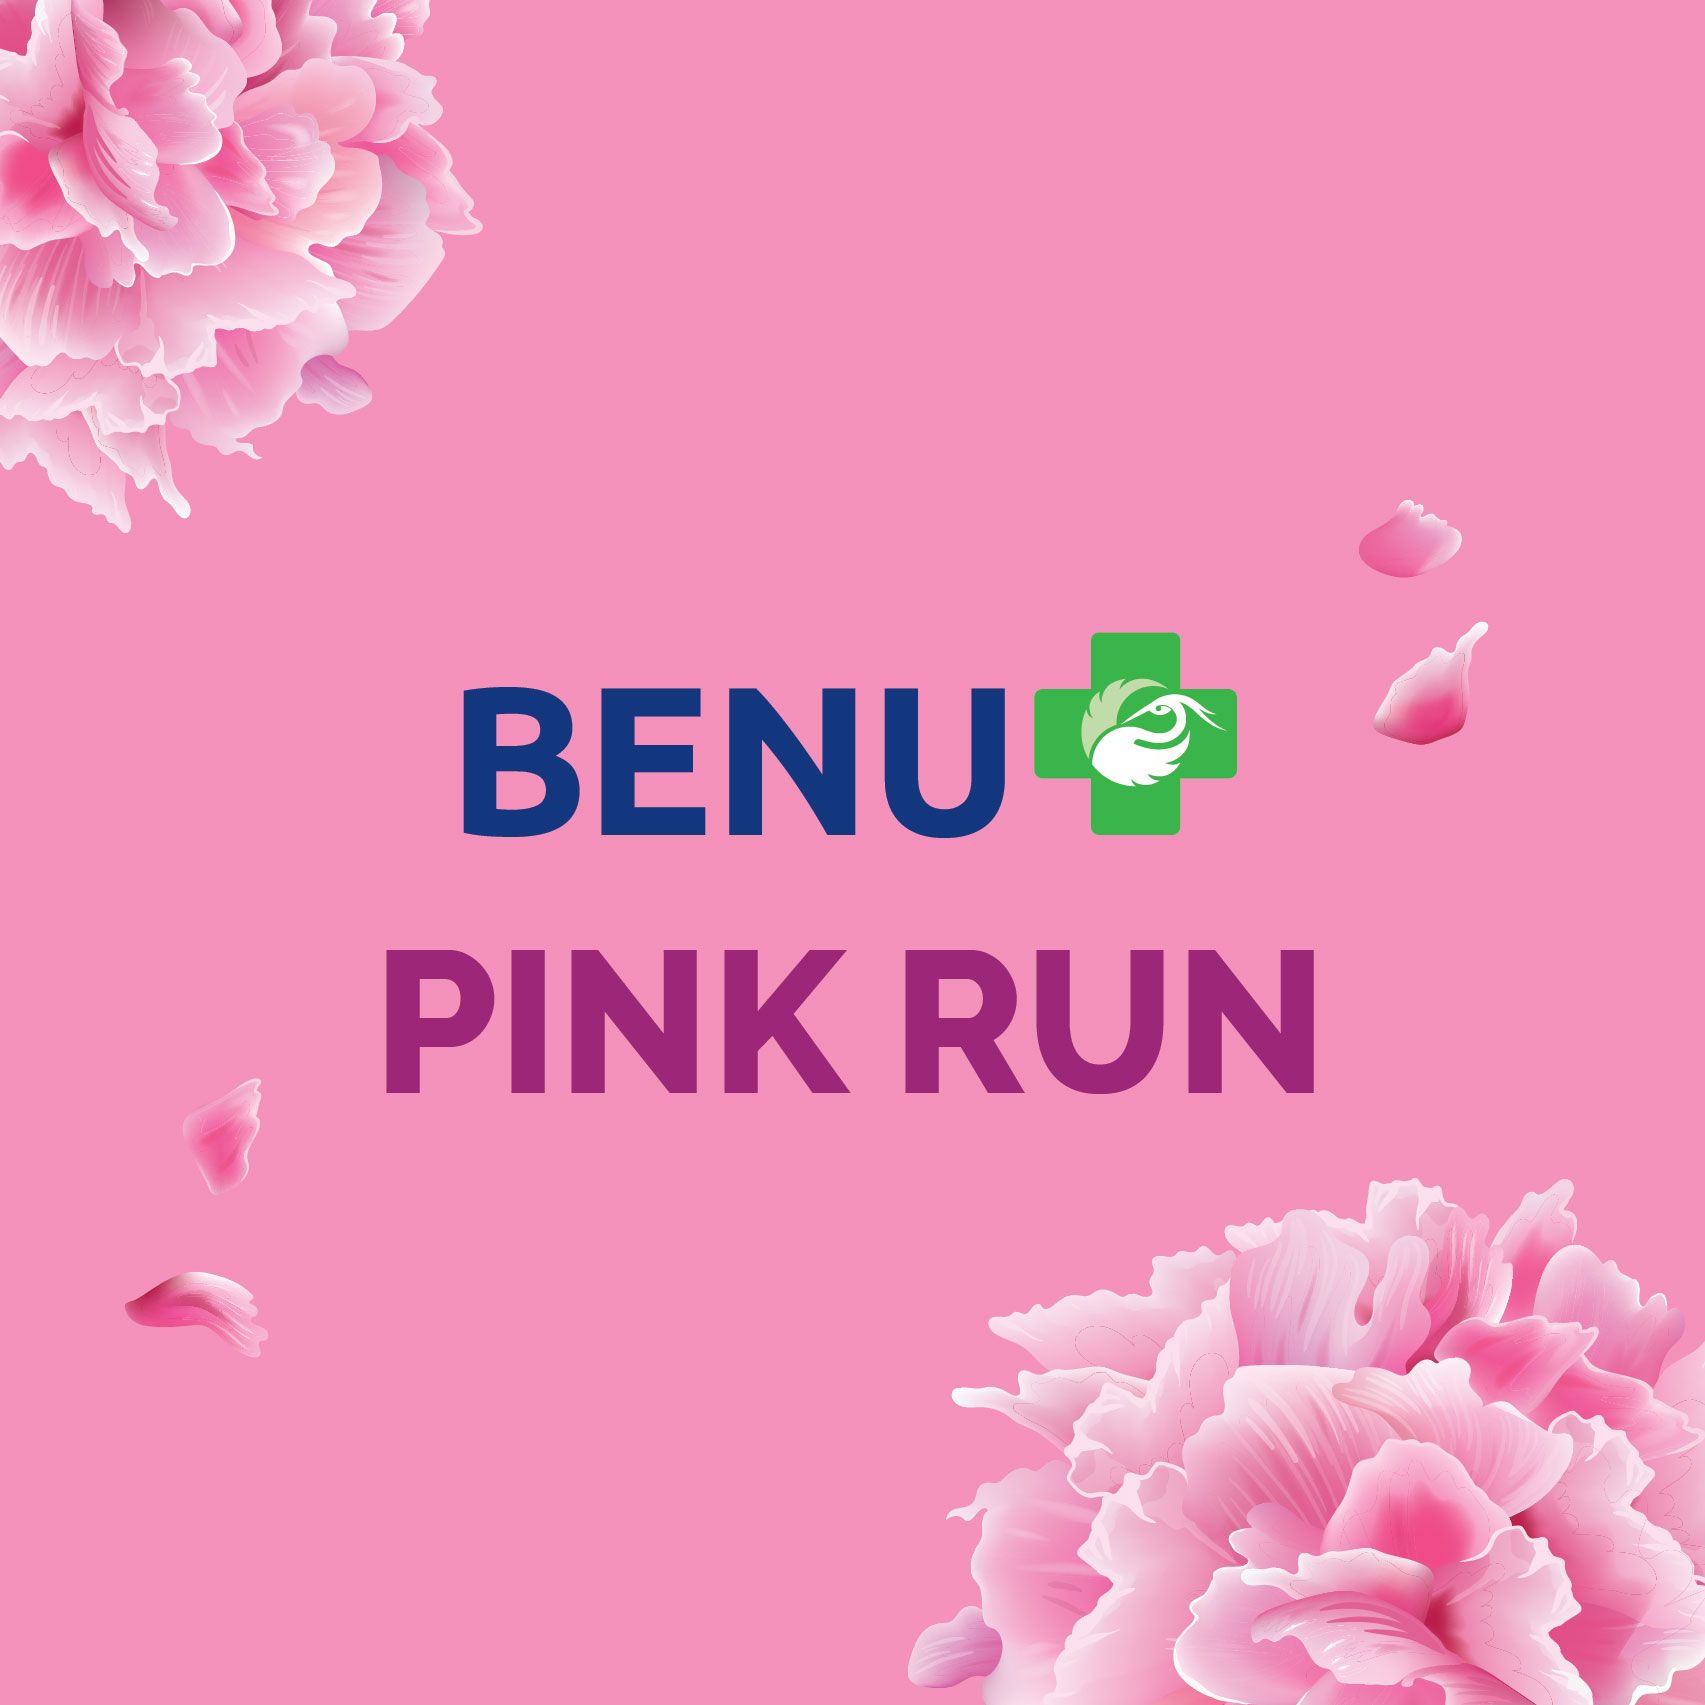 Berta-And-Agency_clients-klientai_Benu-pink-run-su-Benu